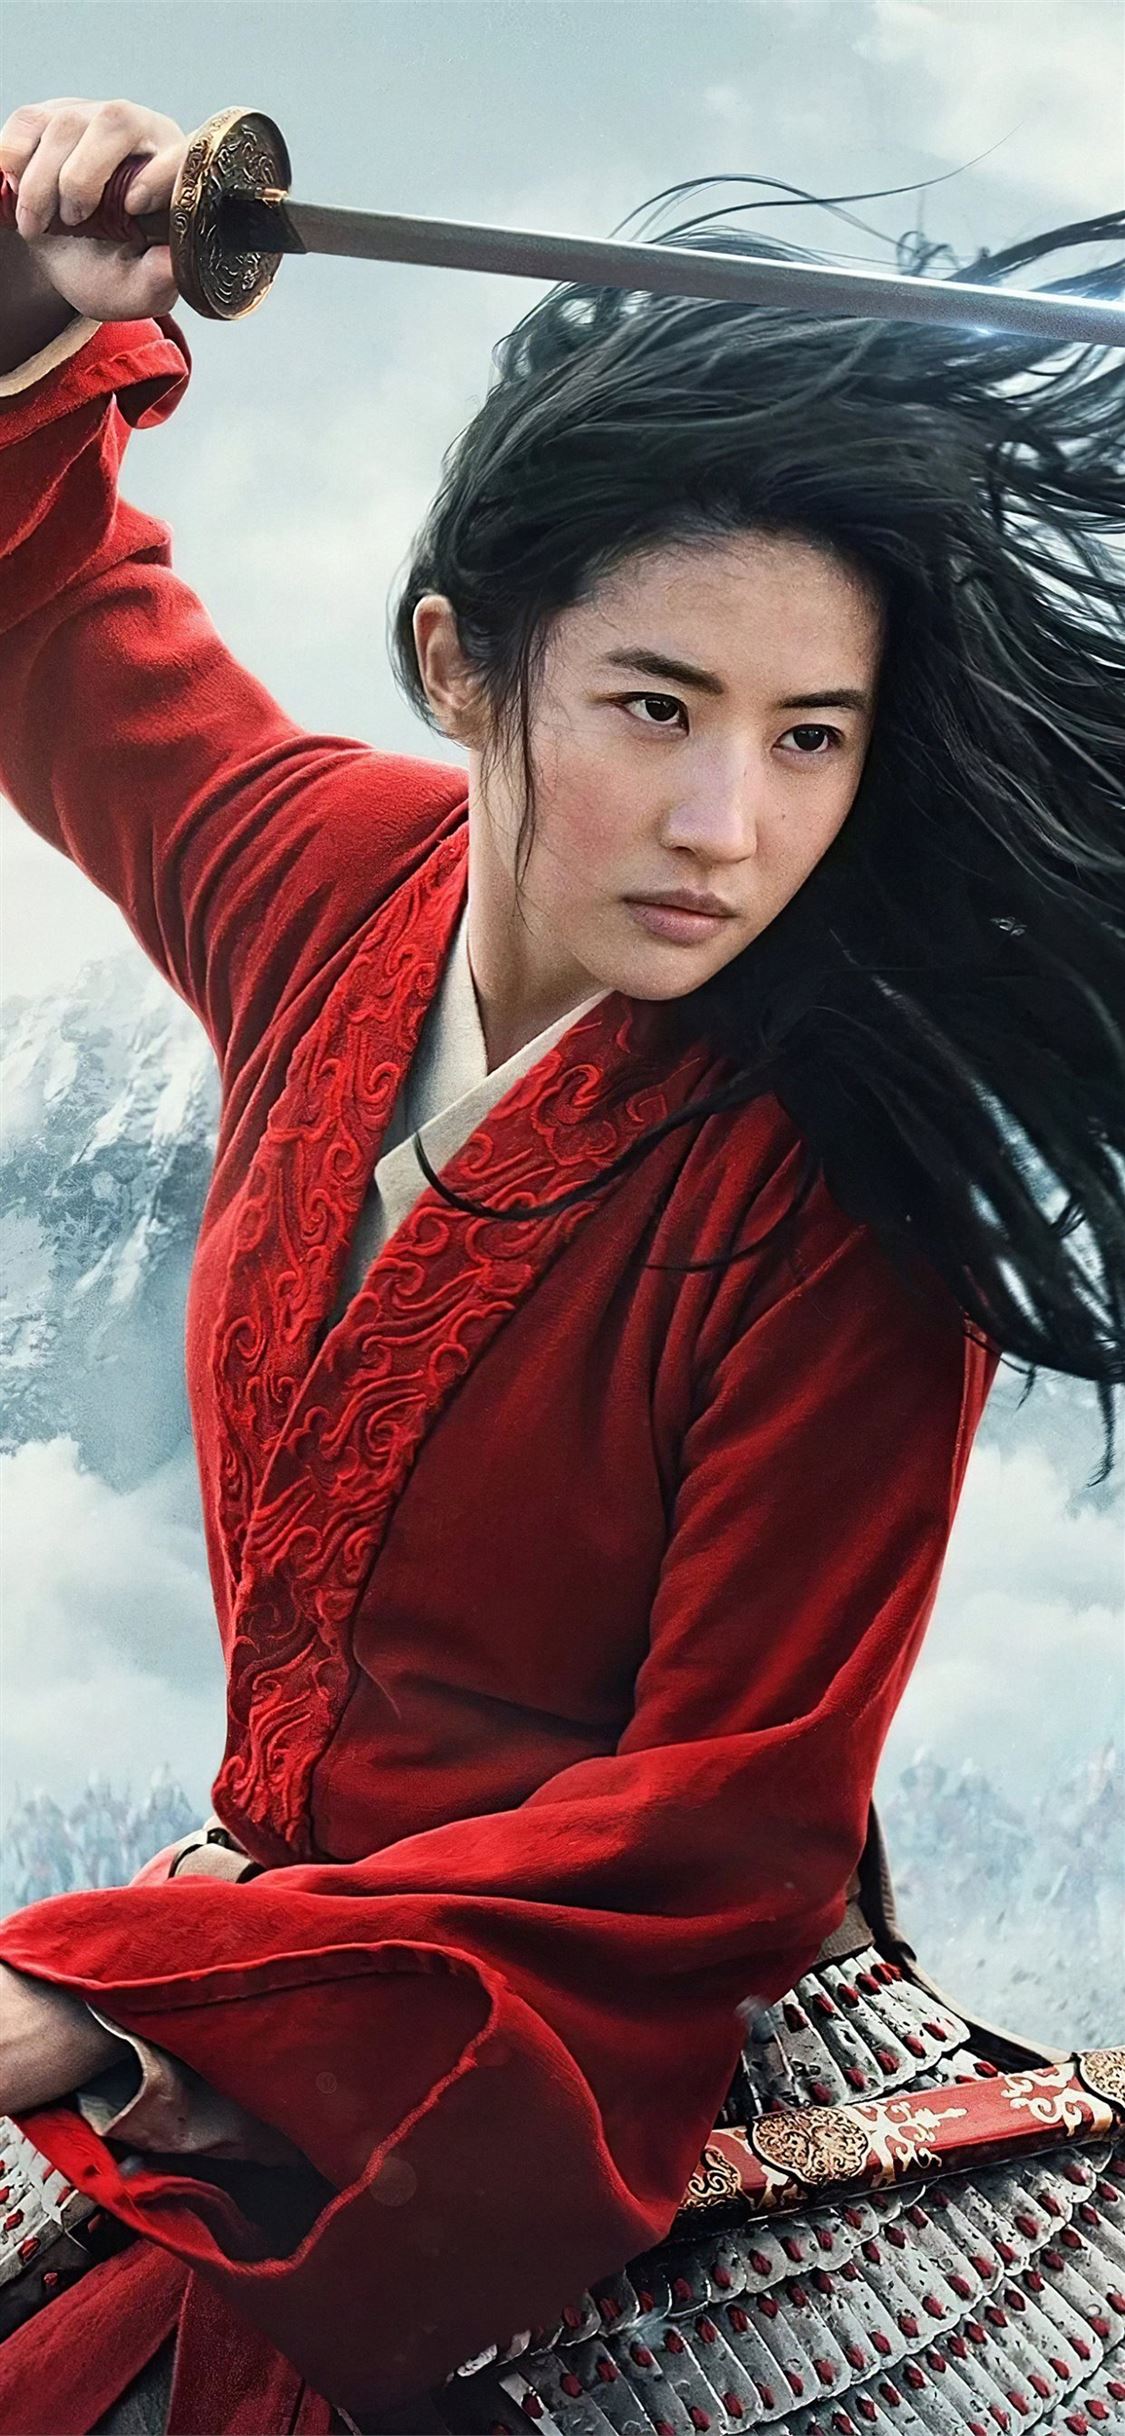 Mulan 2020 Liu Yifei as Mulan holding a sword in the wind iPhone 11 wallpaper - Mulan